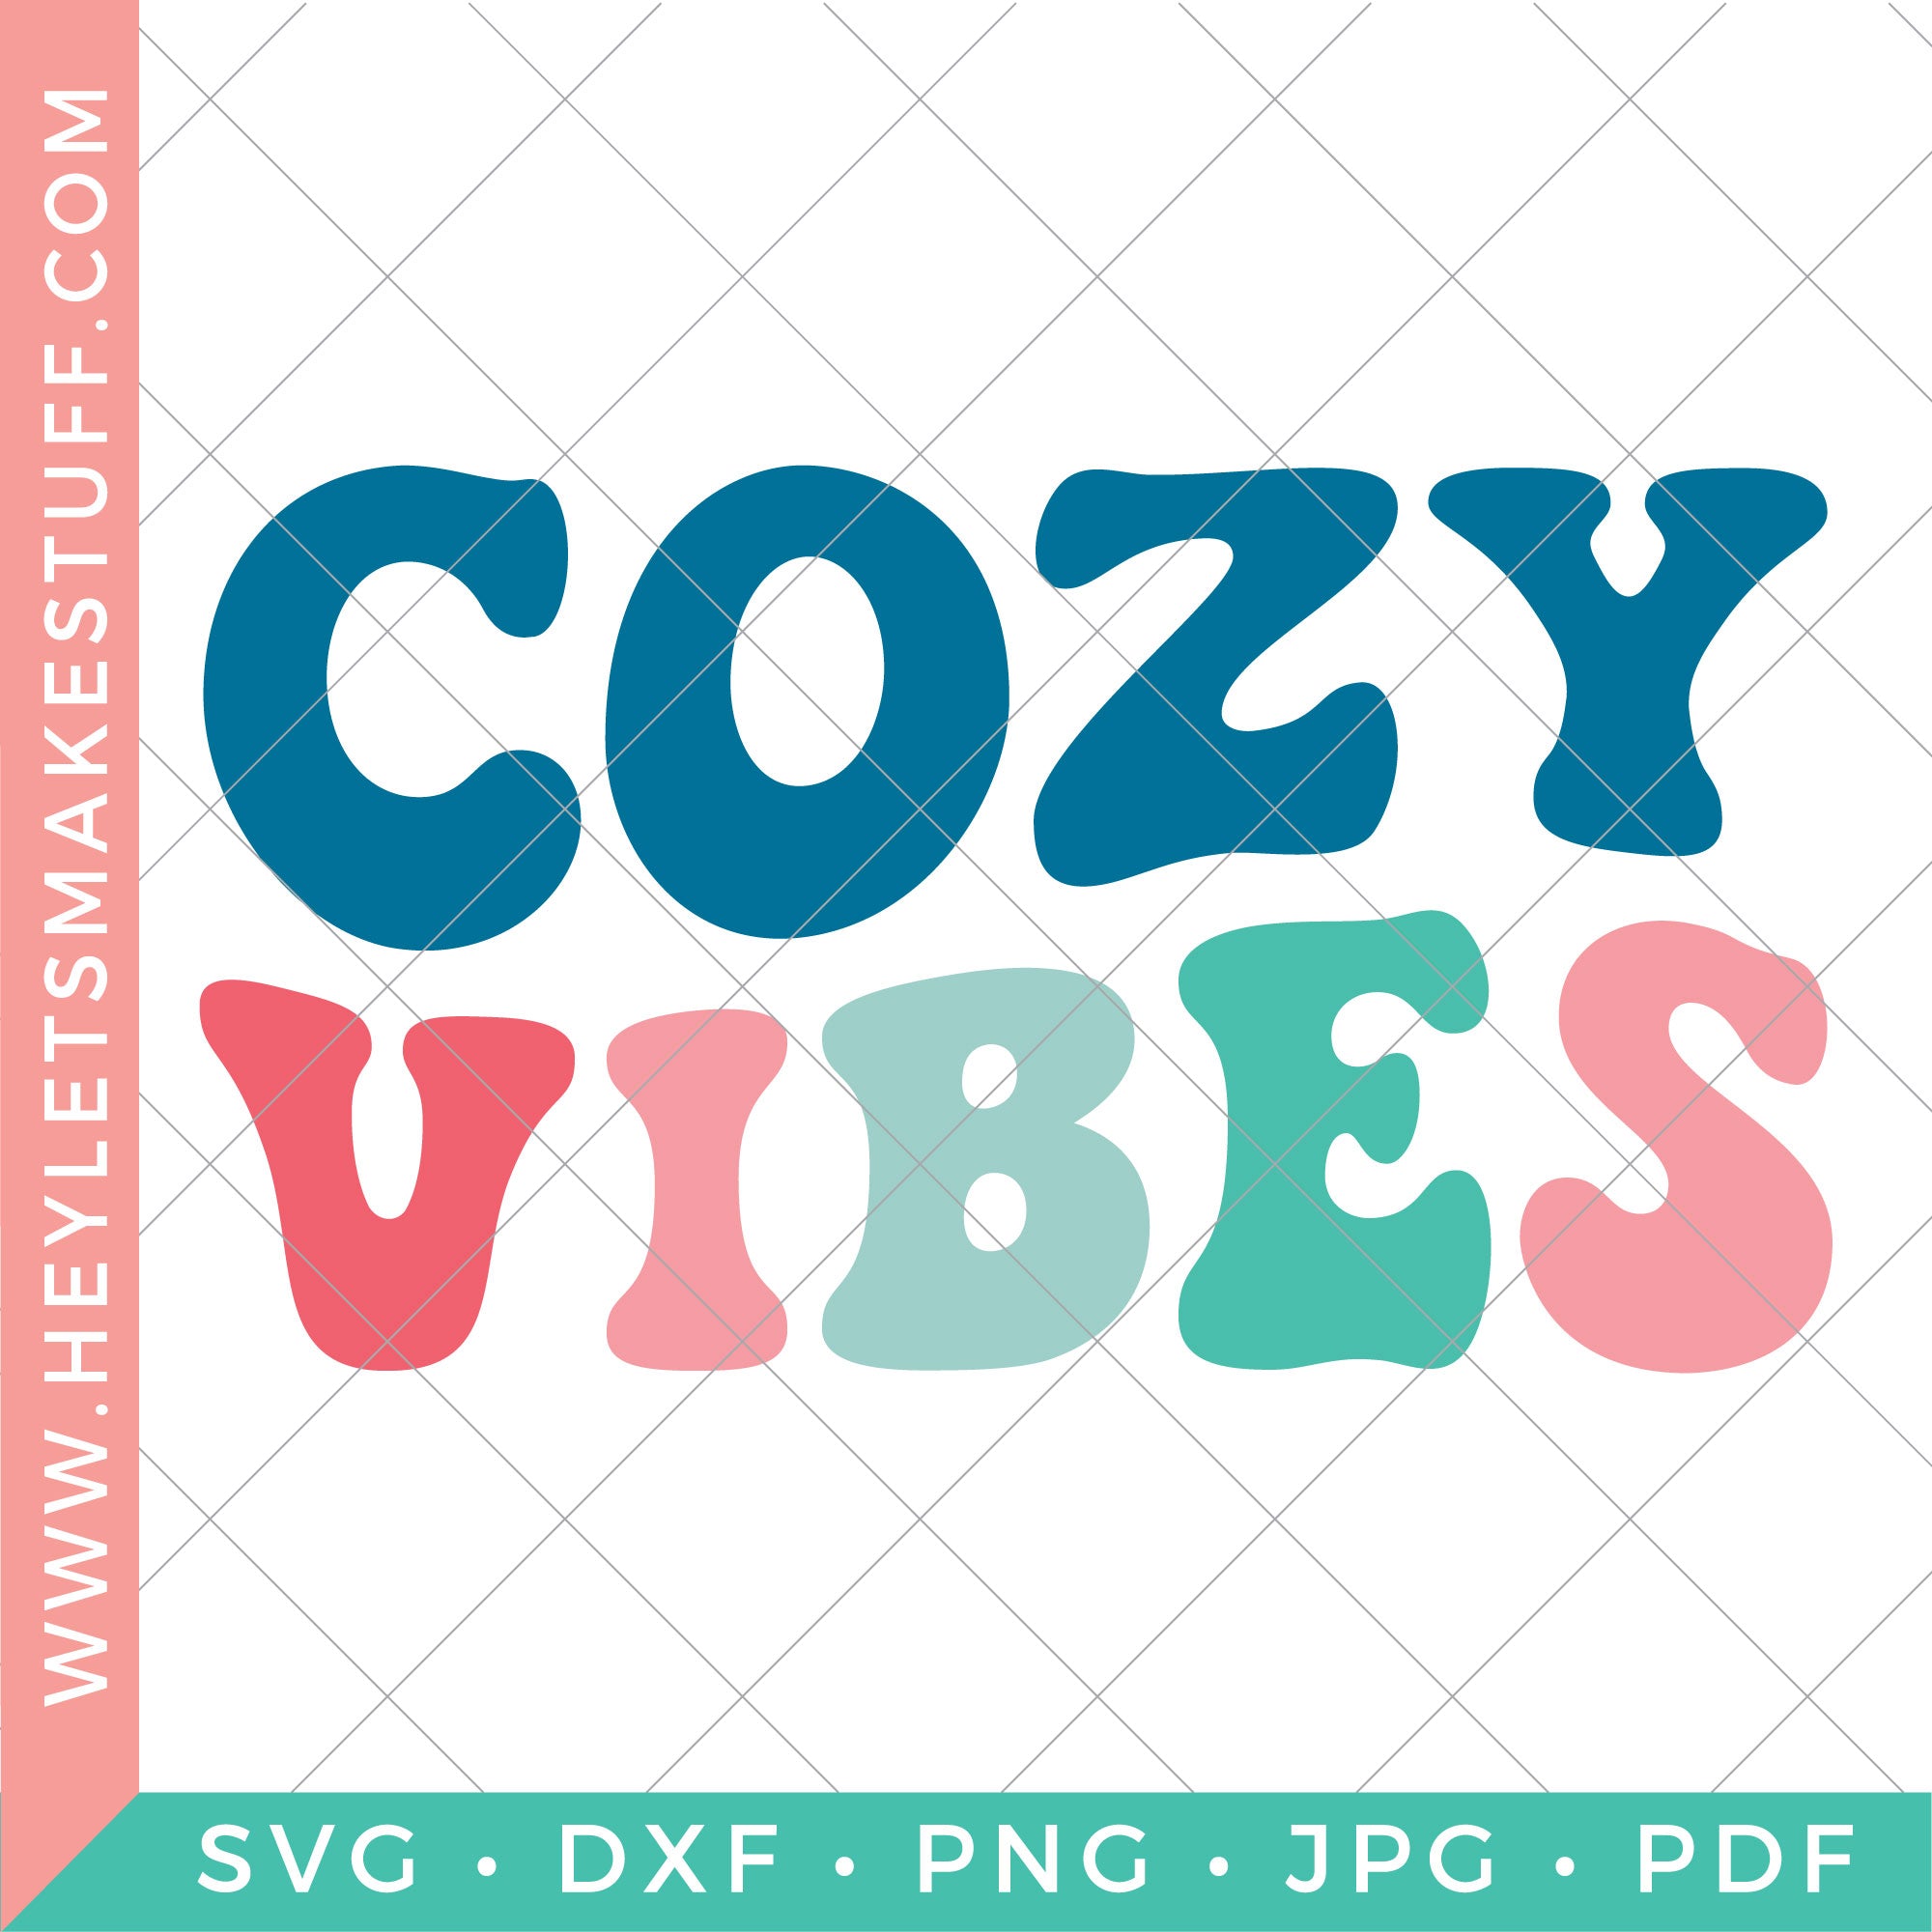 Cozy Vibes – Hey, Let's Make Stuff